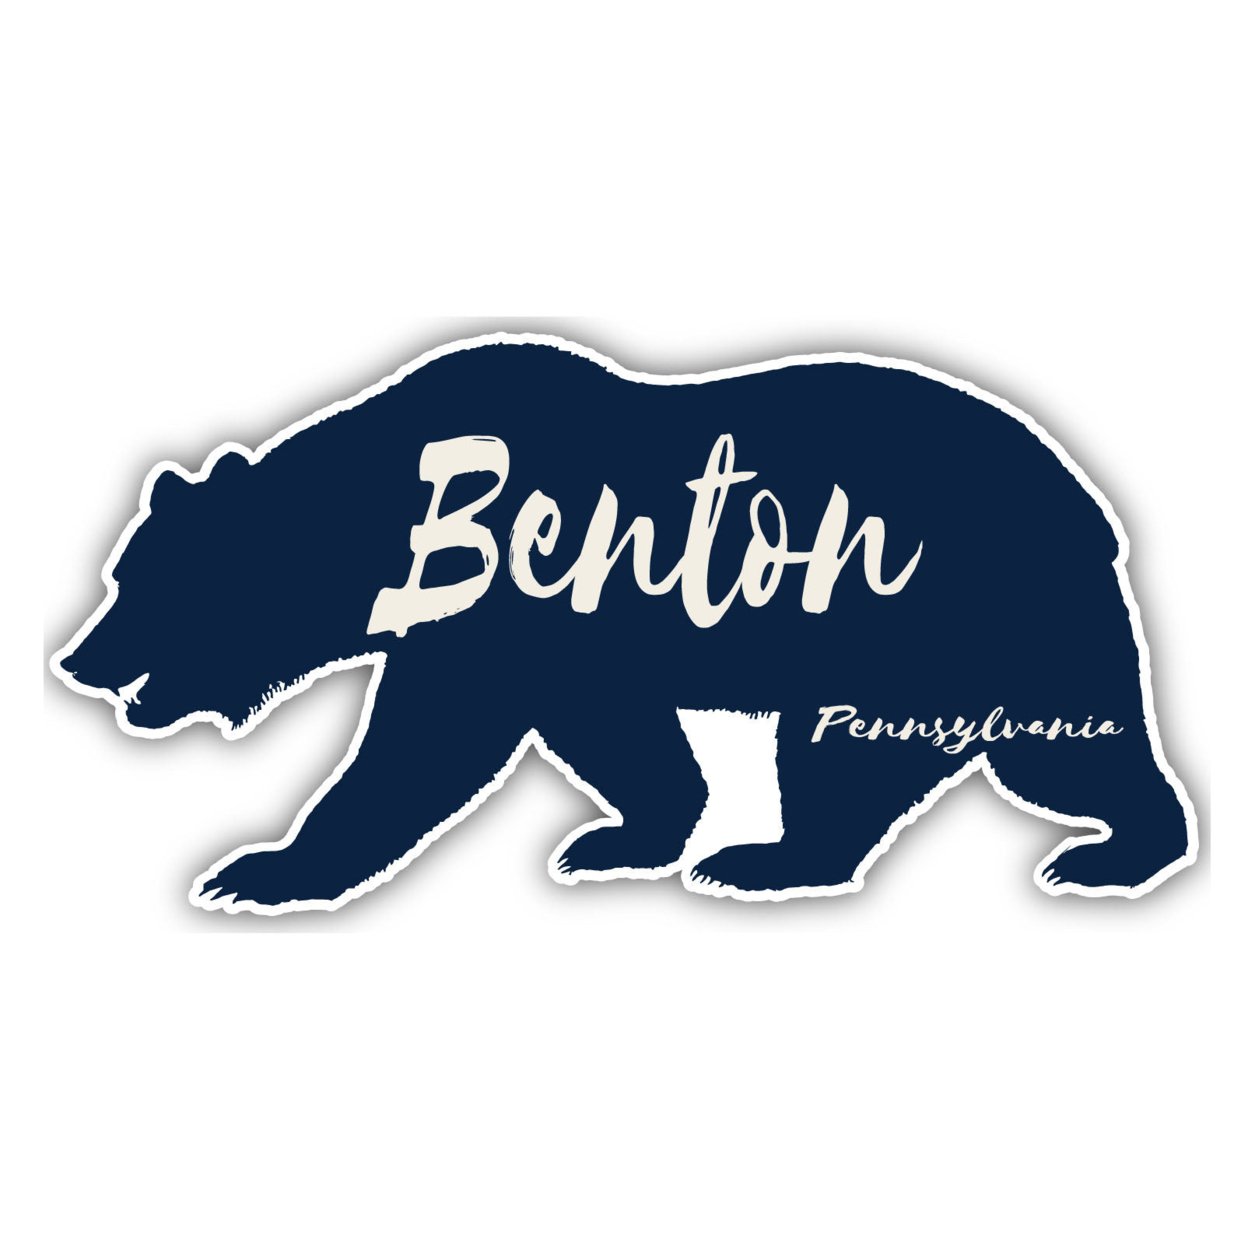 Benton Pennsylvania Souvenir Decorative Stickers (Choose Theme And Size) - 4-Pack, 12-Inch, Bear